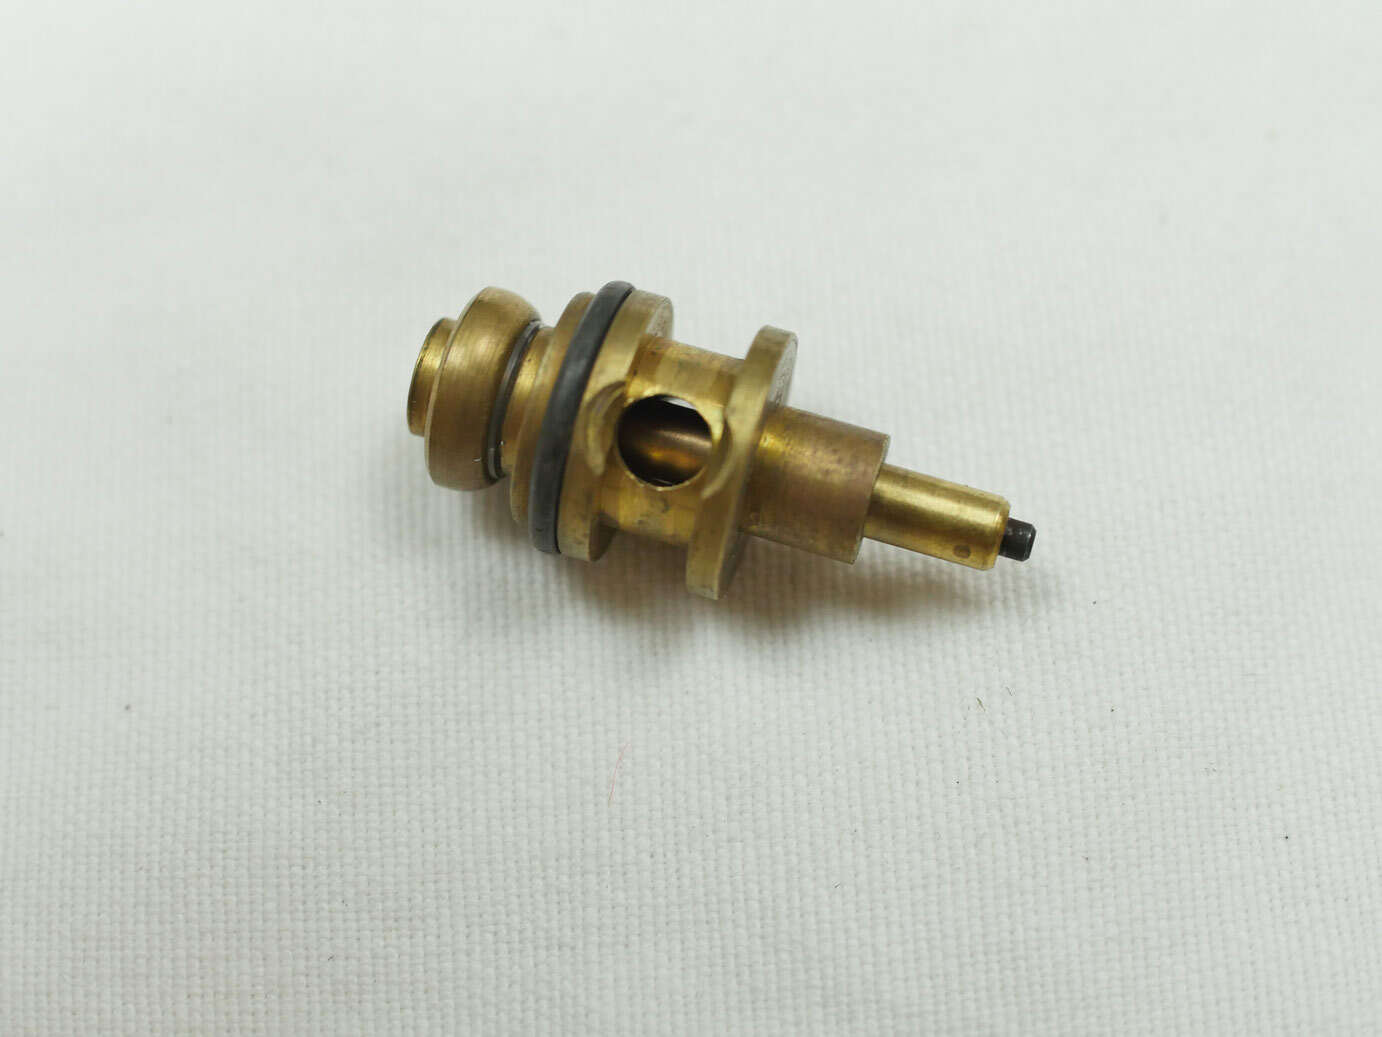 Stock cocker valve, earlier valve, small transfer hole. Good shape valve